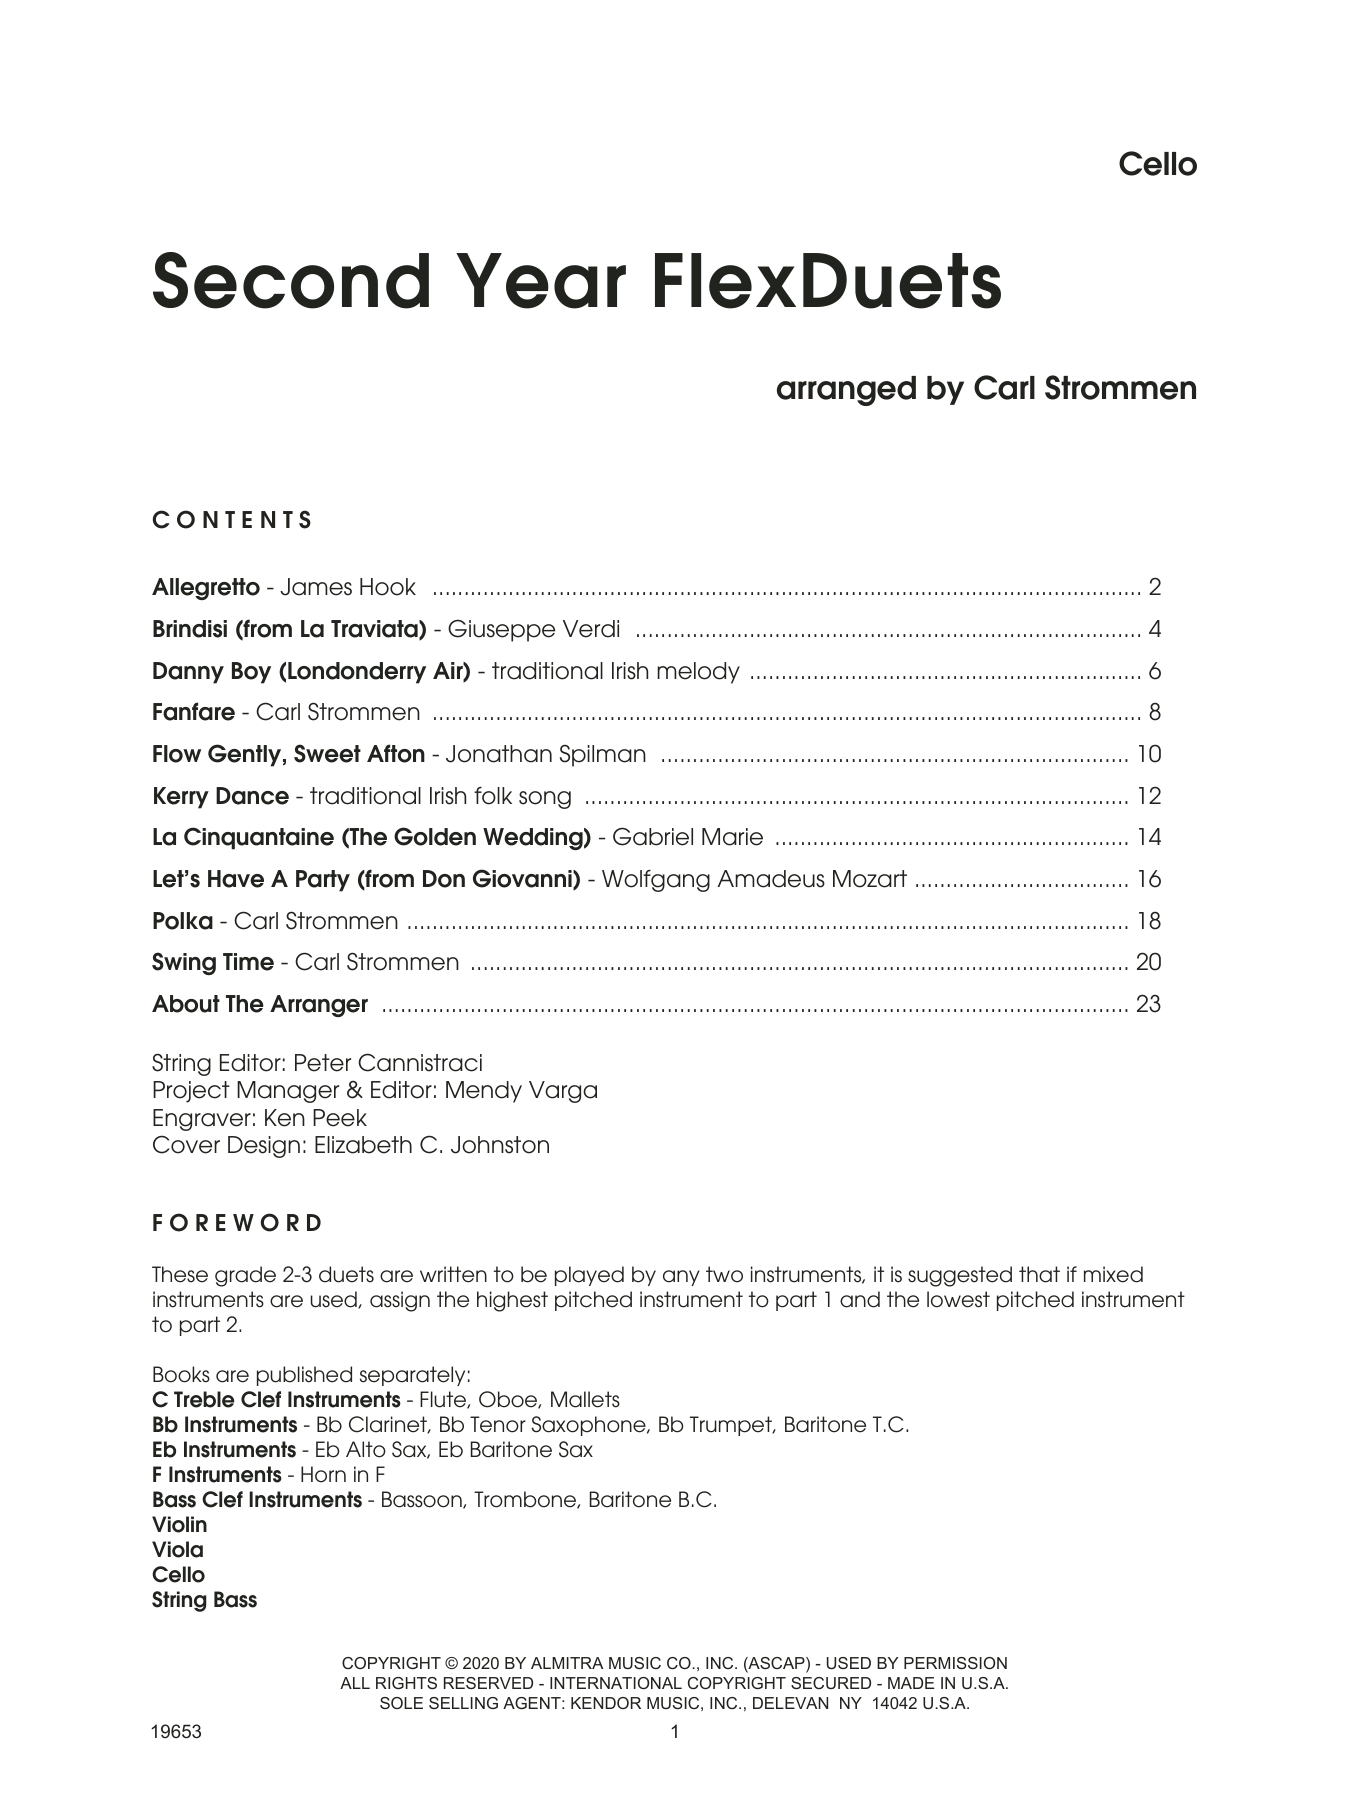 Download Carl Strommen Second Year FlexDuets - Cello Sheet Music